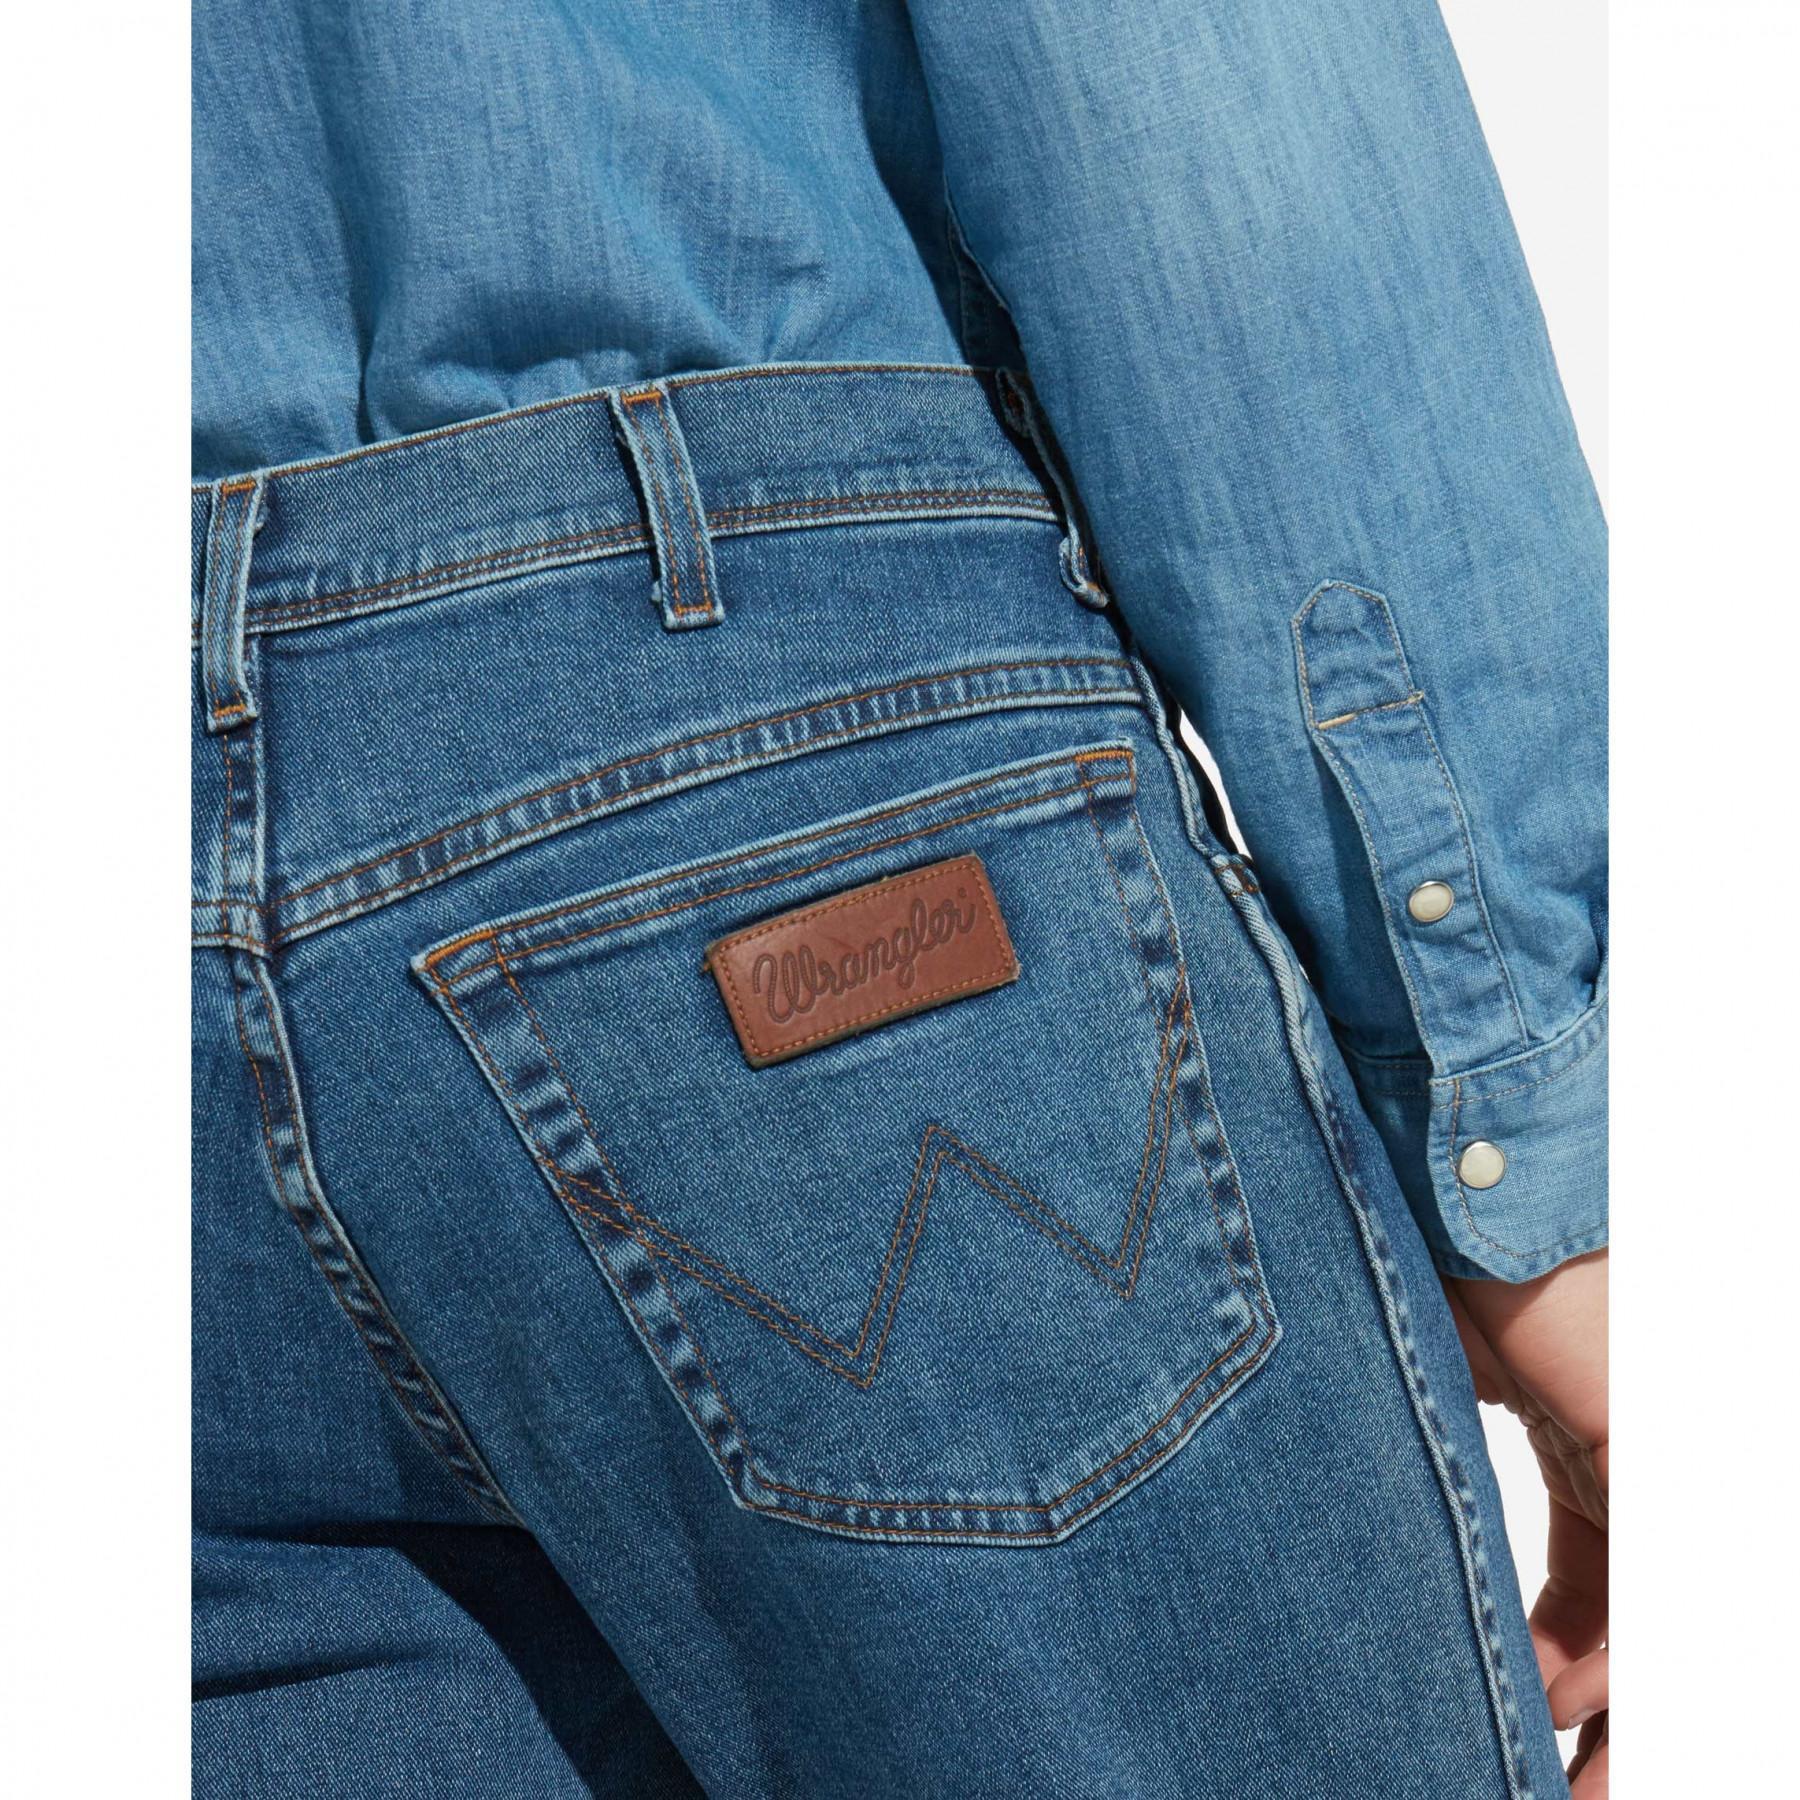 Jeans Wrangler texas stretch stonewash